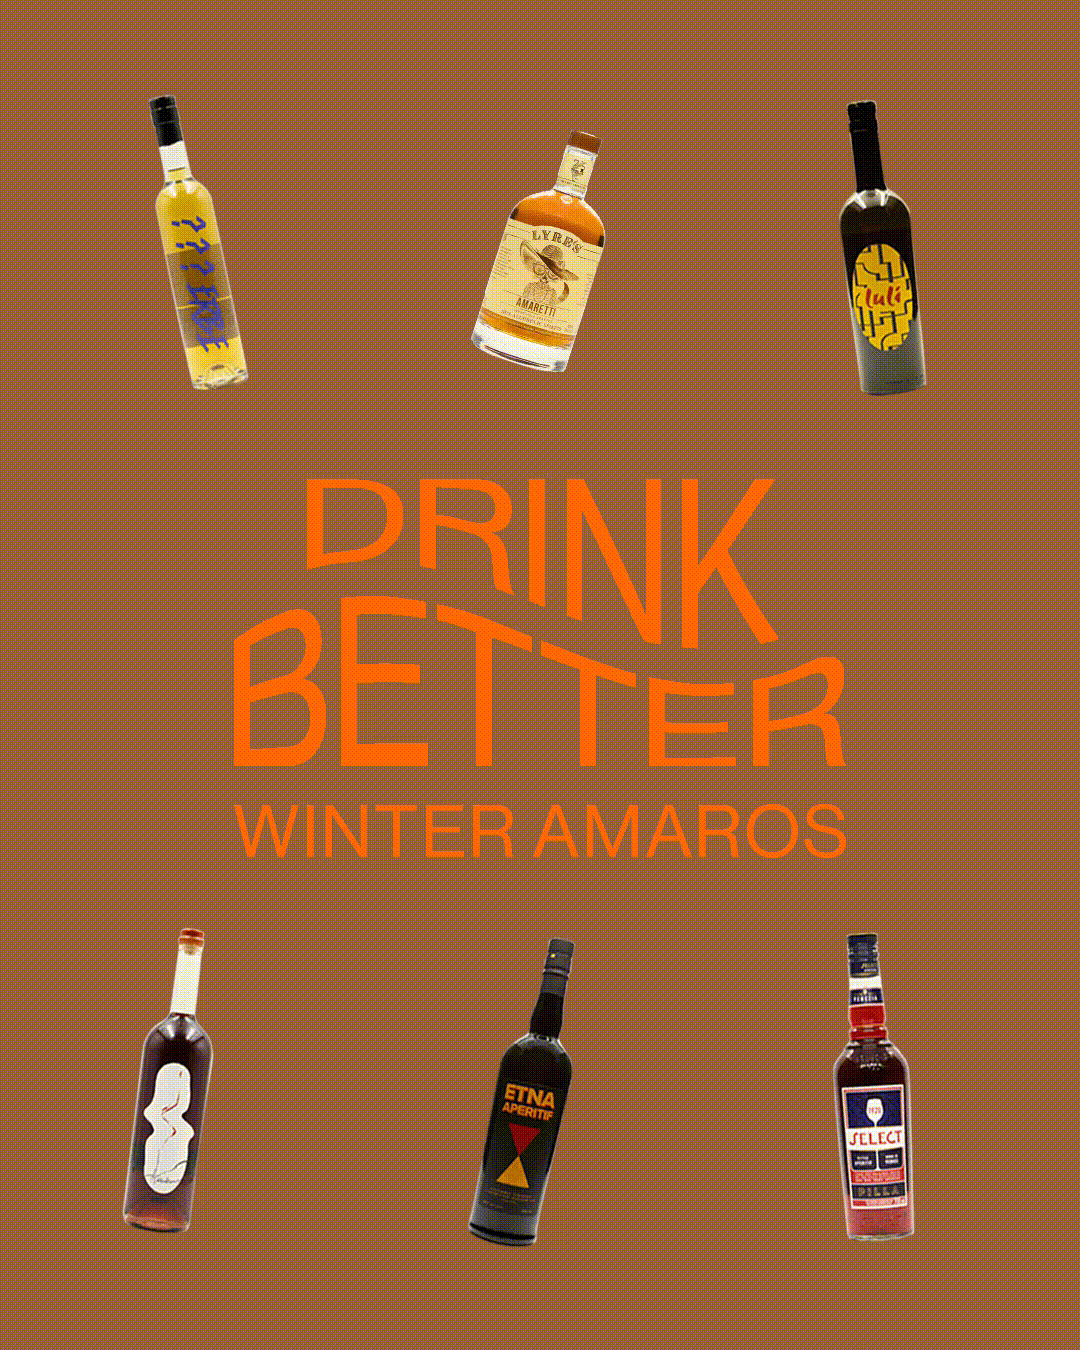 ❄️ DRINK BETTER Winter Amaro - DRNKS